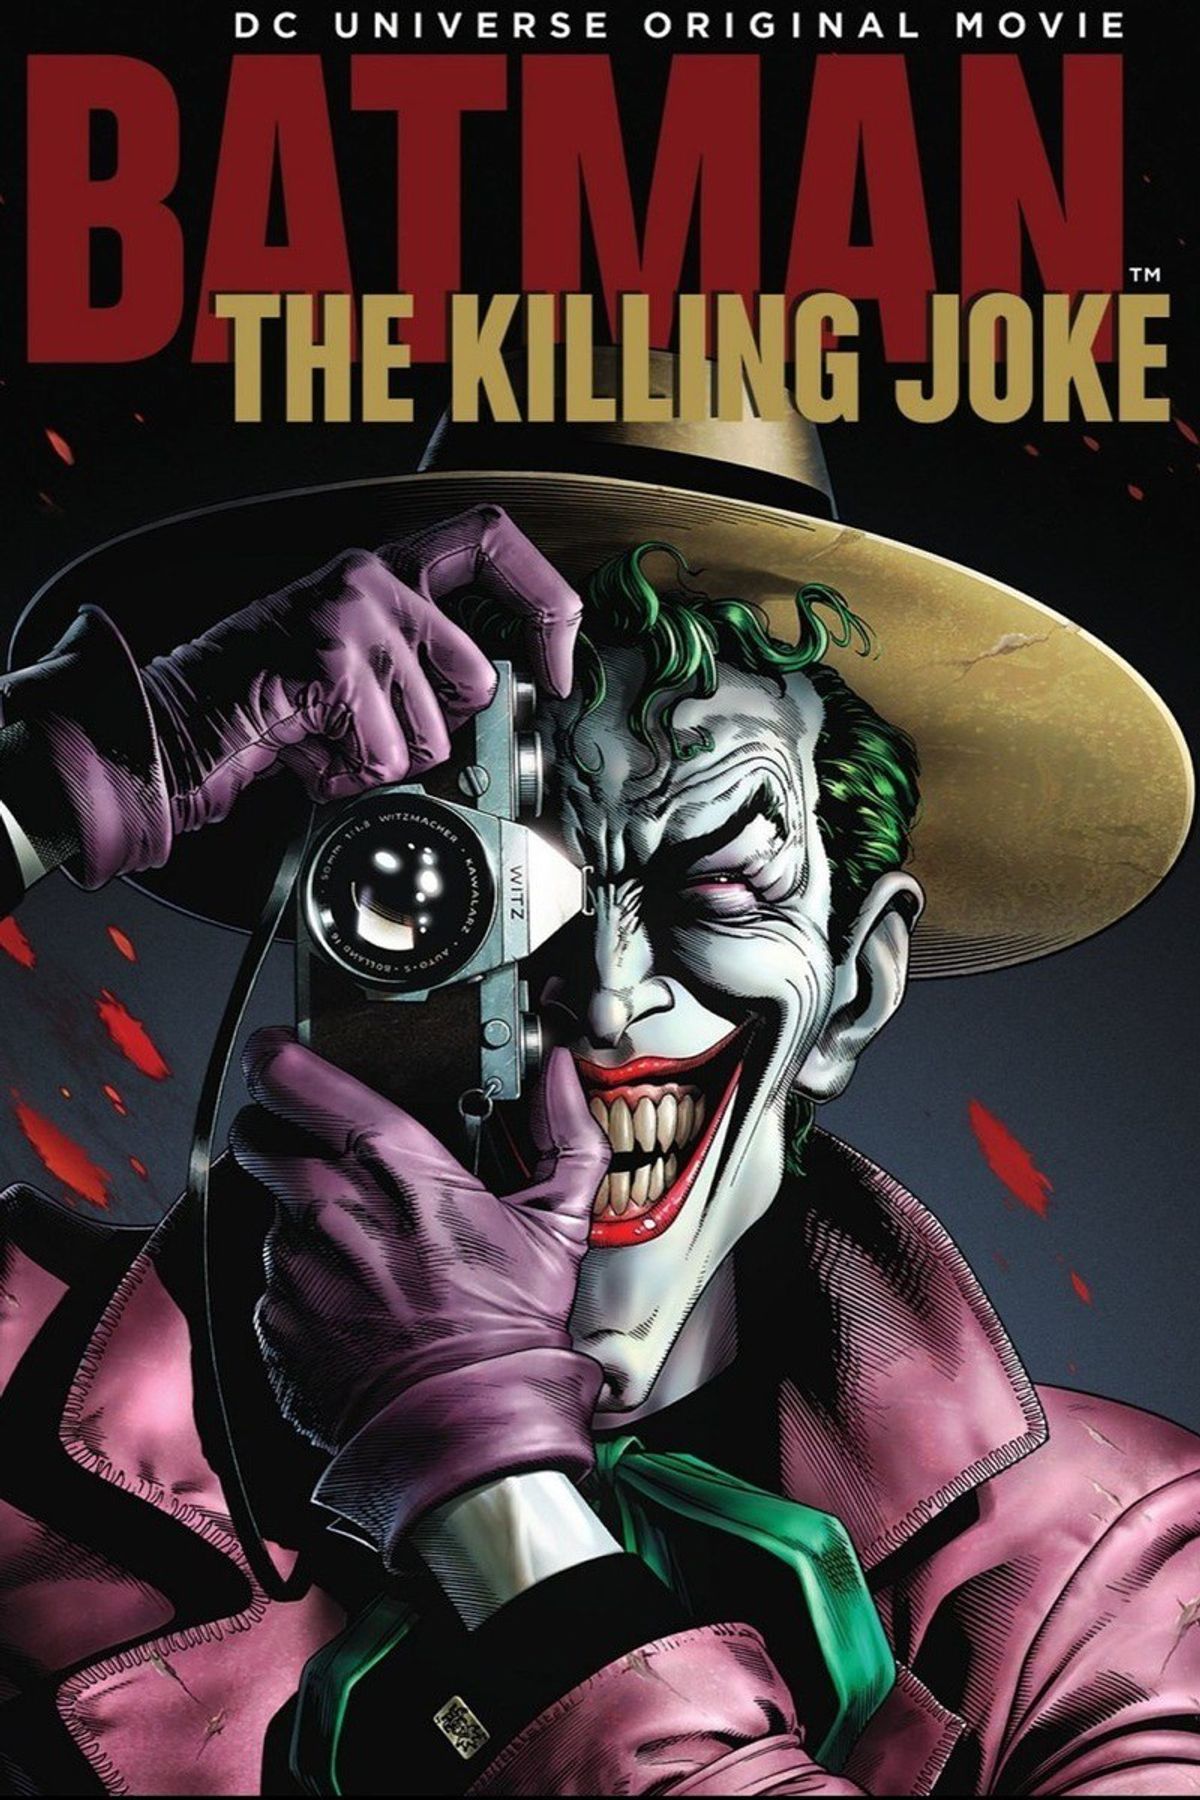 My Response To 'Batman: The Killing Joke'